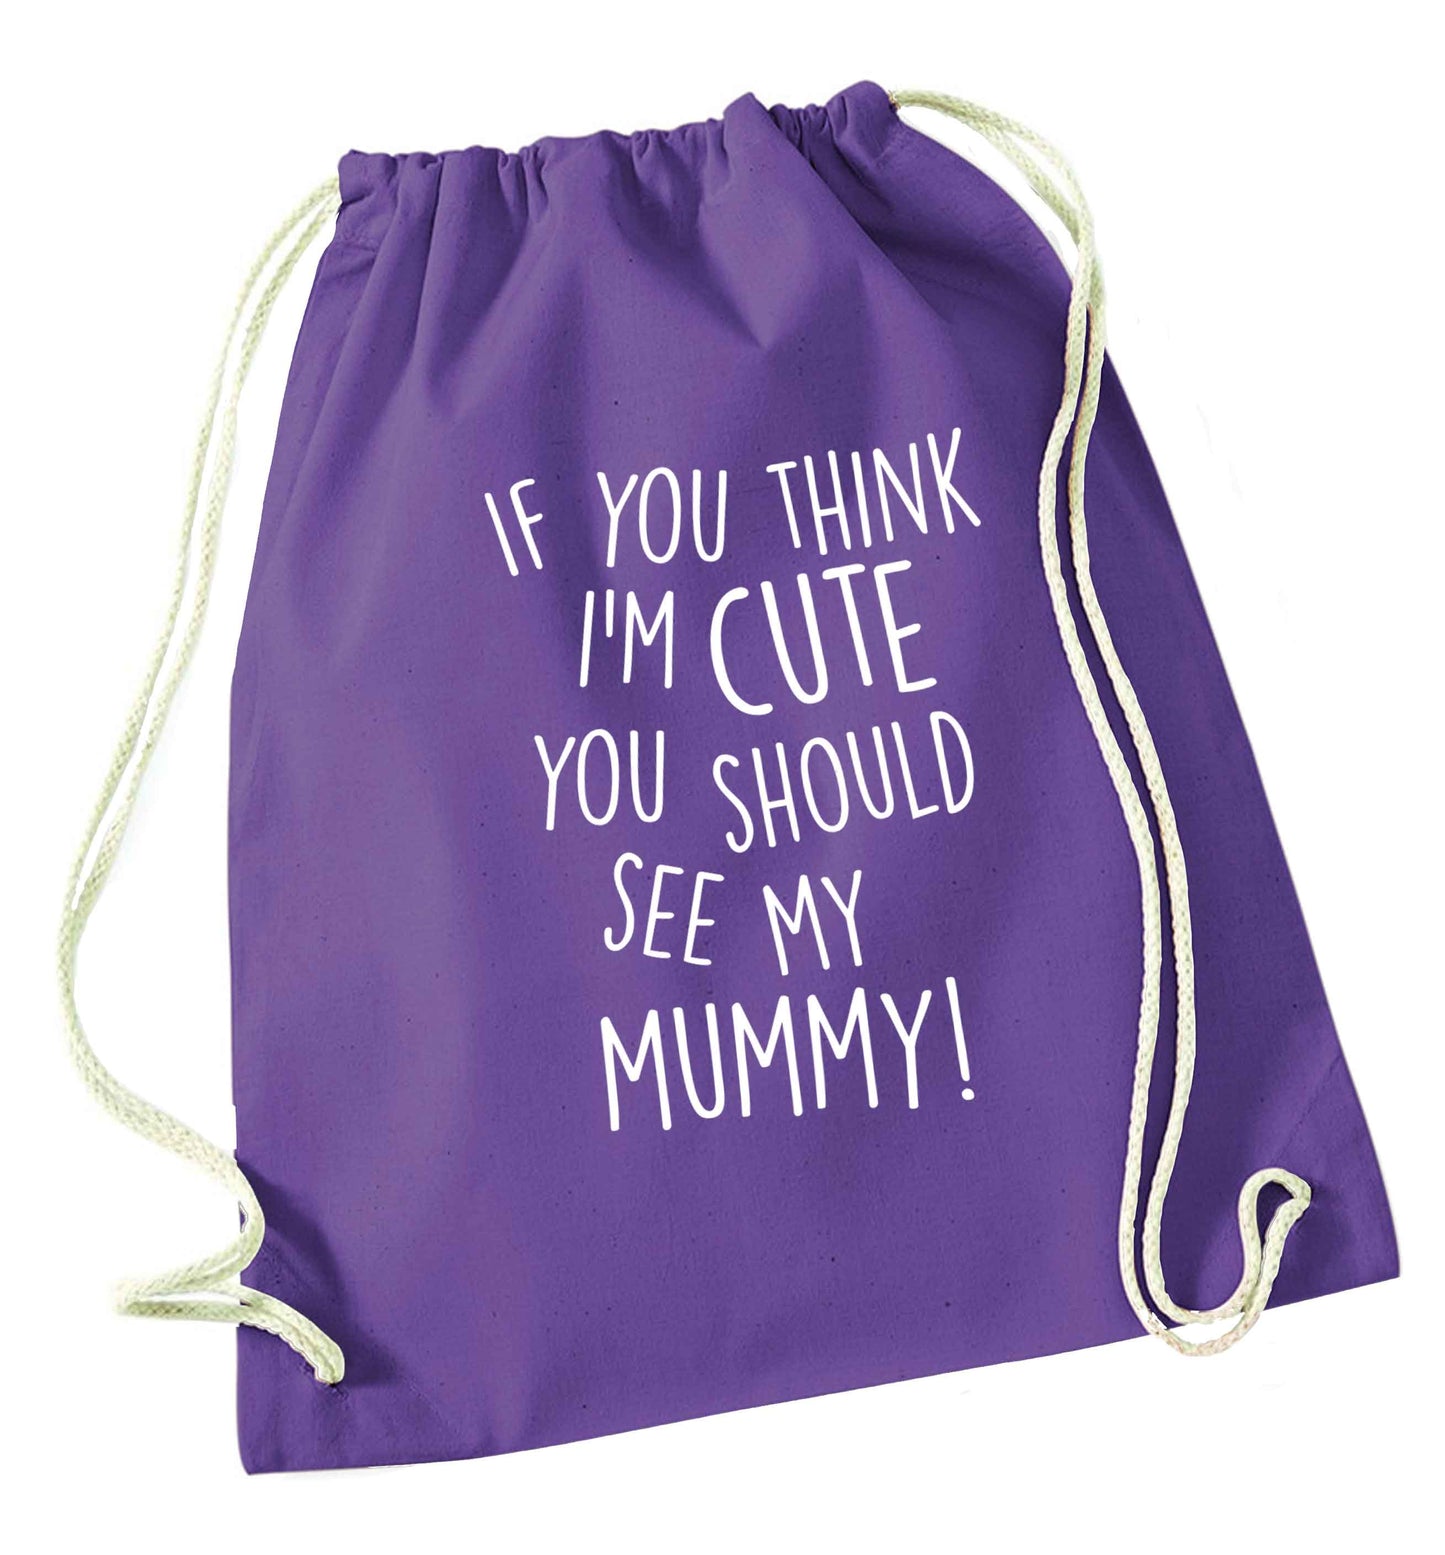 If you think I'm cute you should see my mummy purple drawstring bag